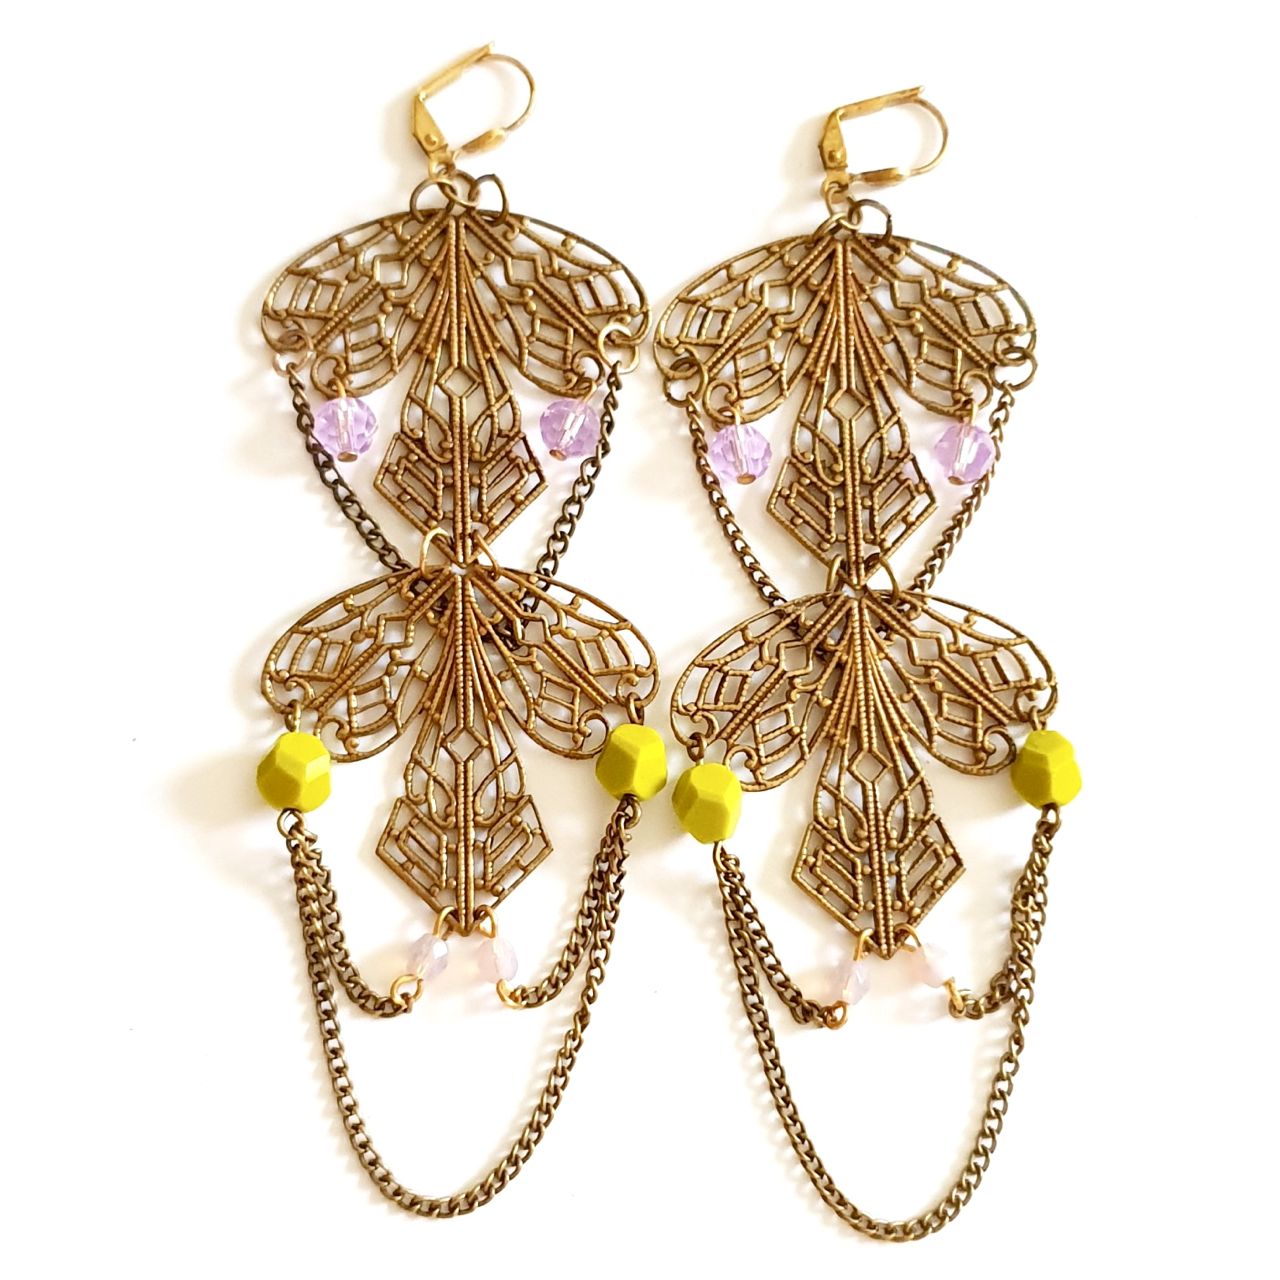 Femme Earrings Layered Filigree Chartruese and Lilac